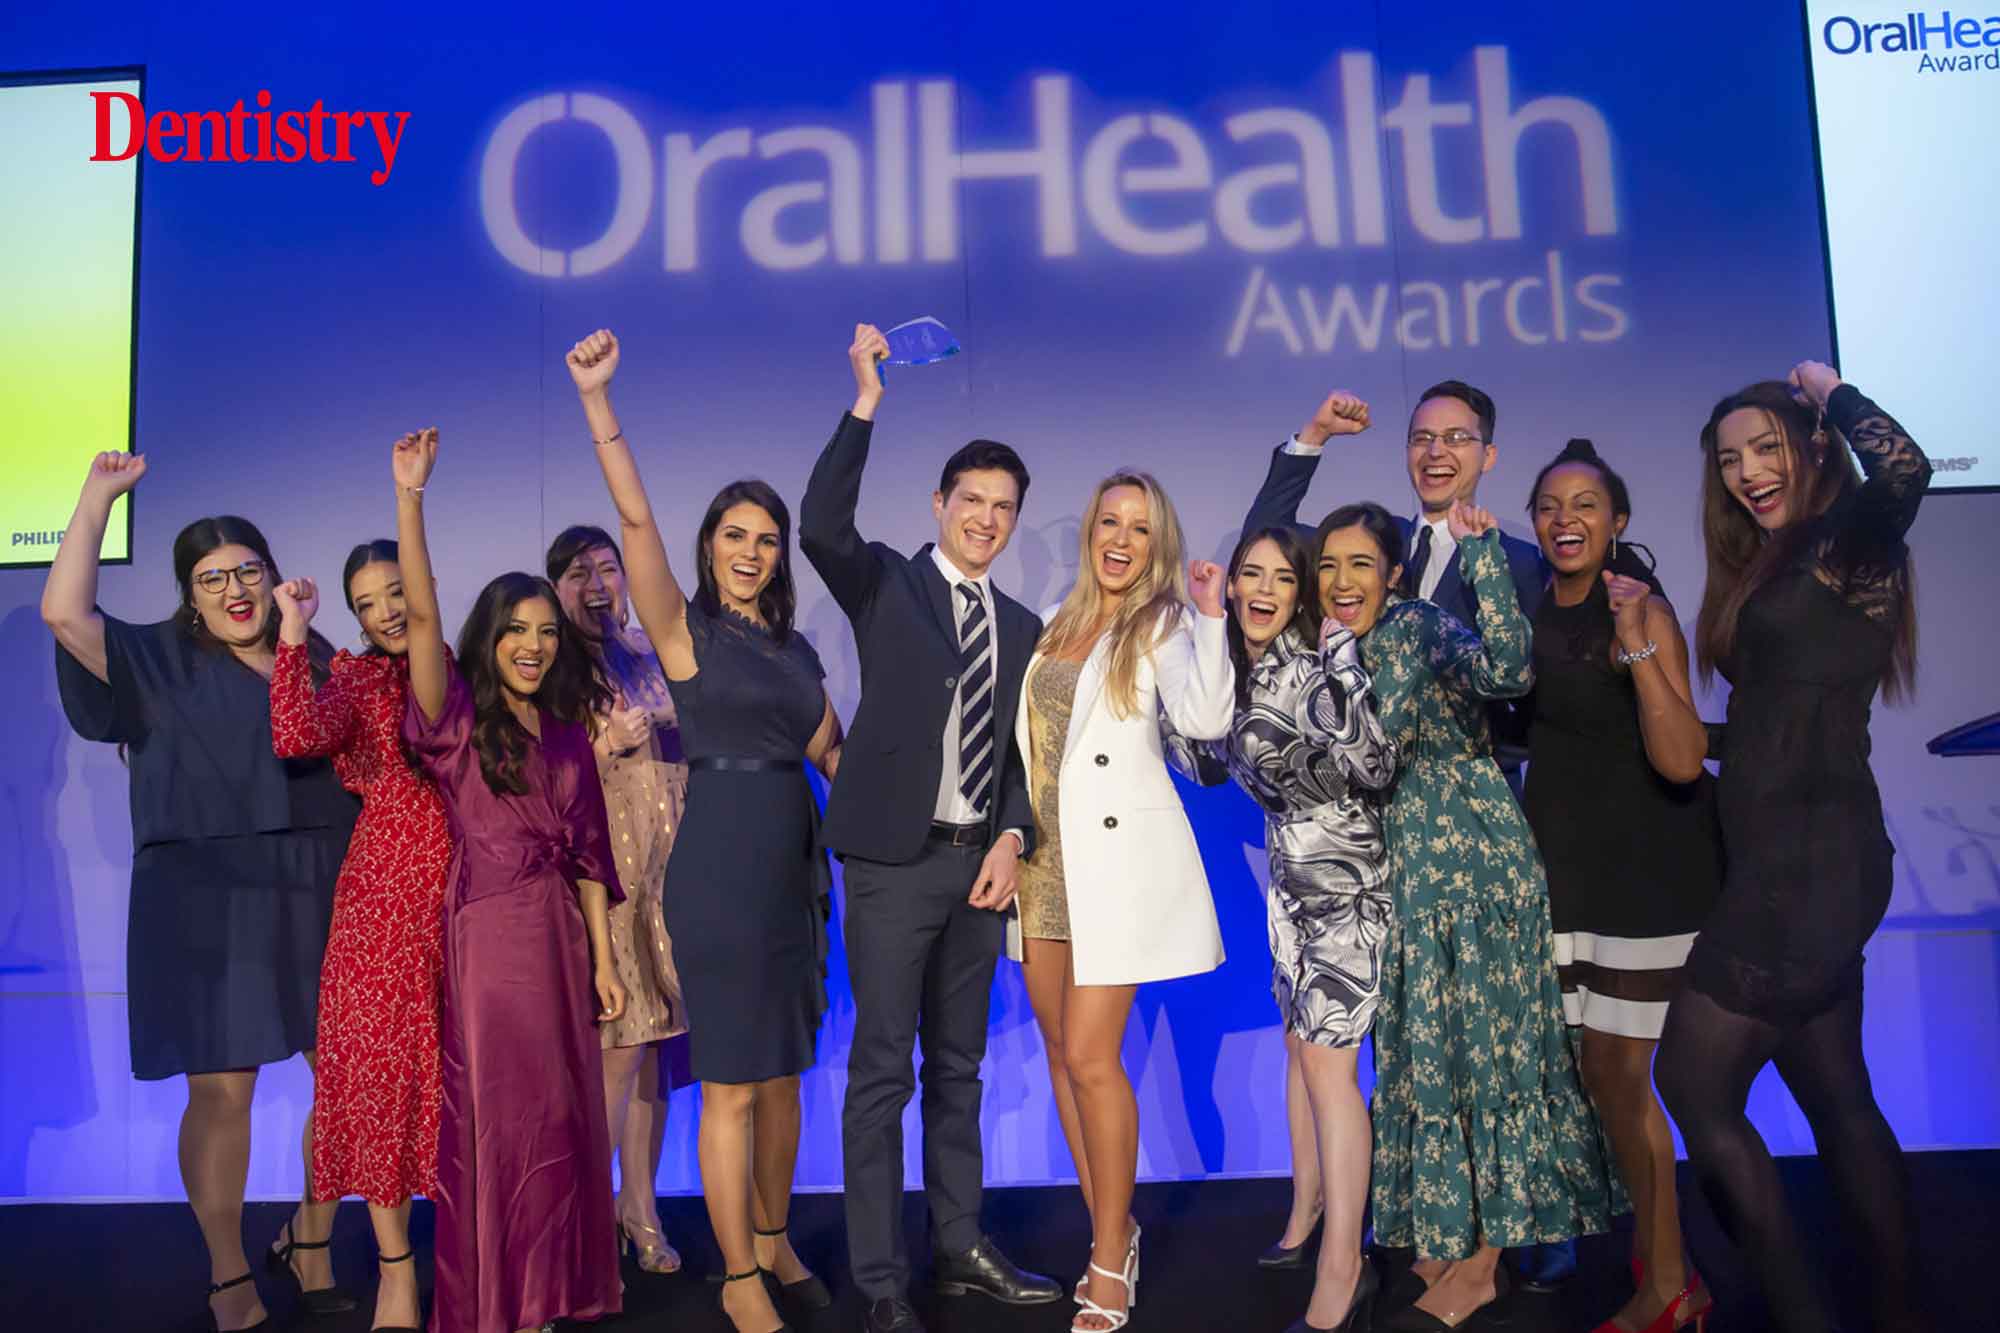 Oral Health Awards